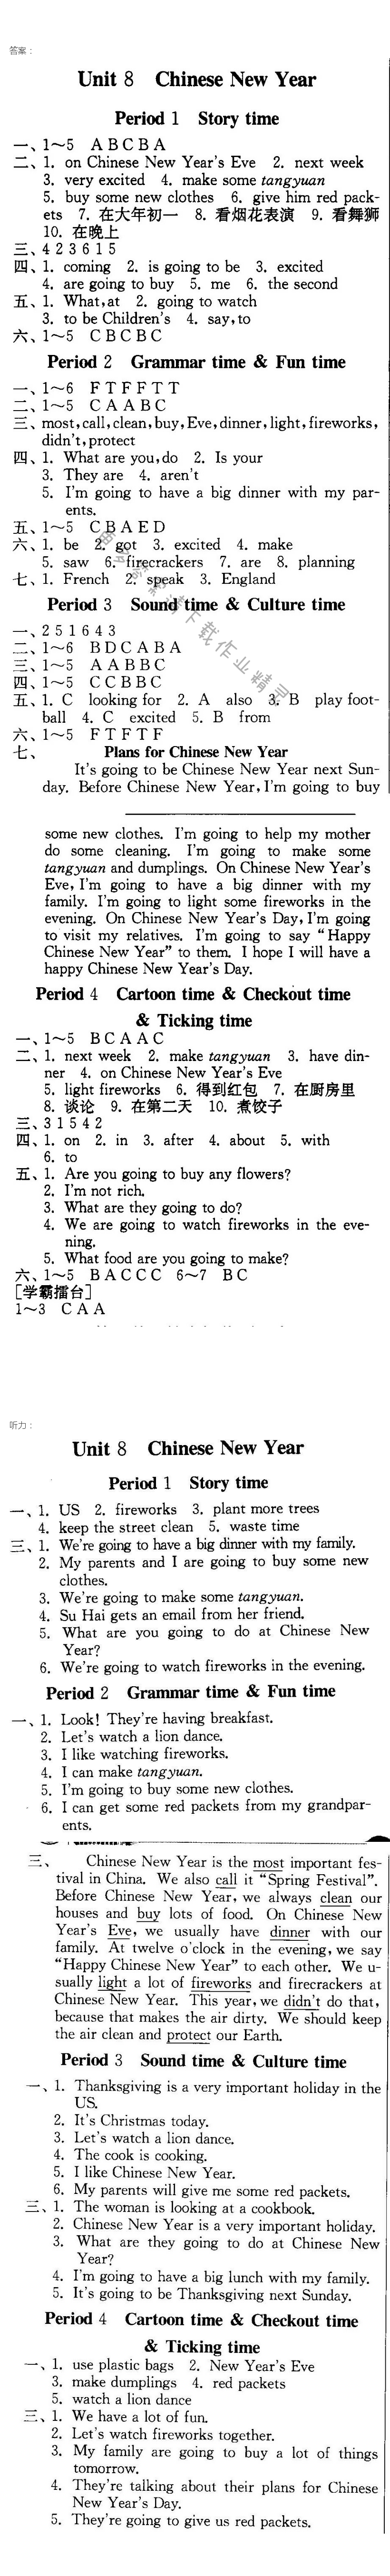 Unit 8 Chinese New Year